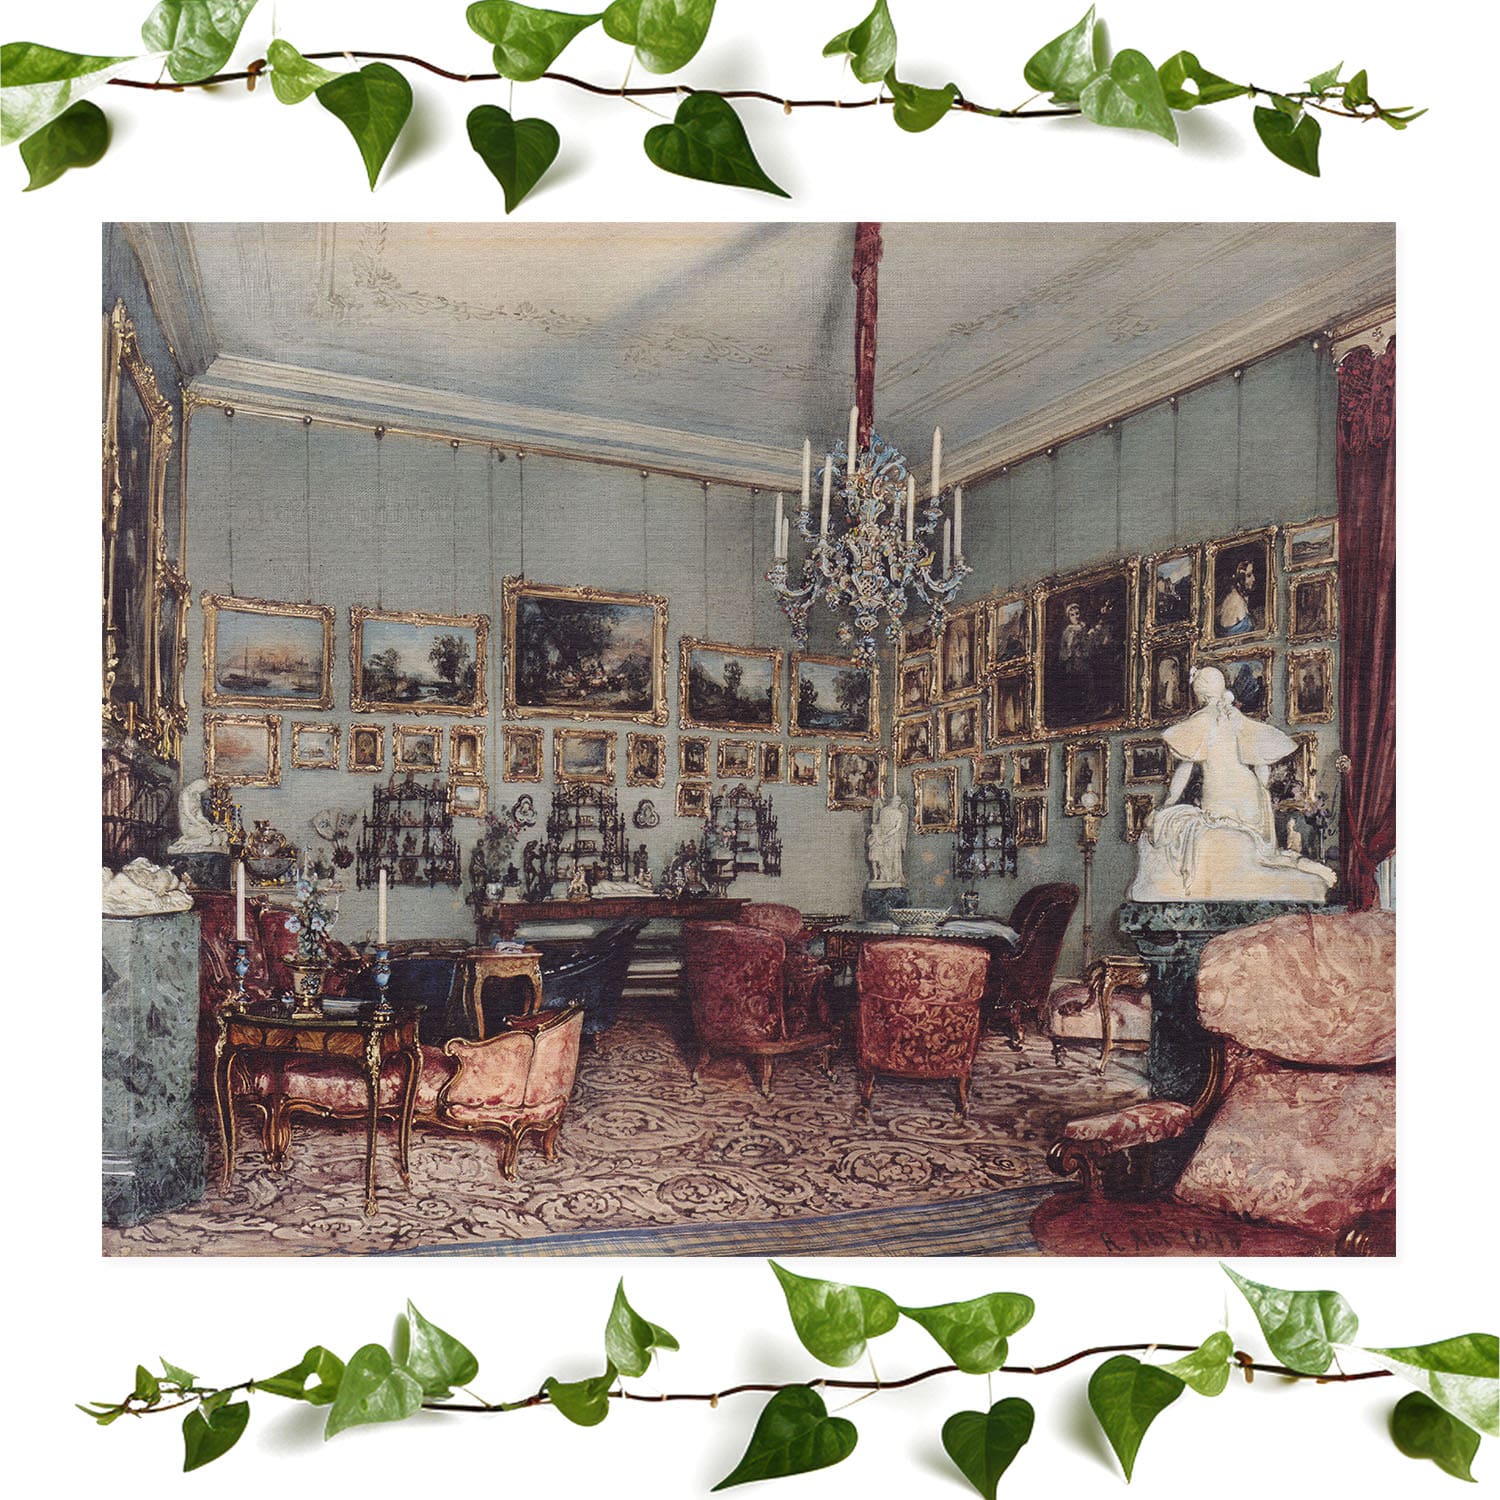 Victorian Decor art prints featuring a light academia, vintage wall art room decor